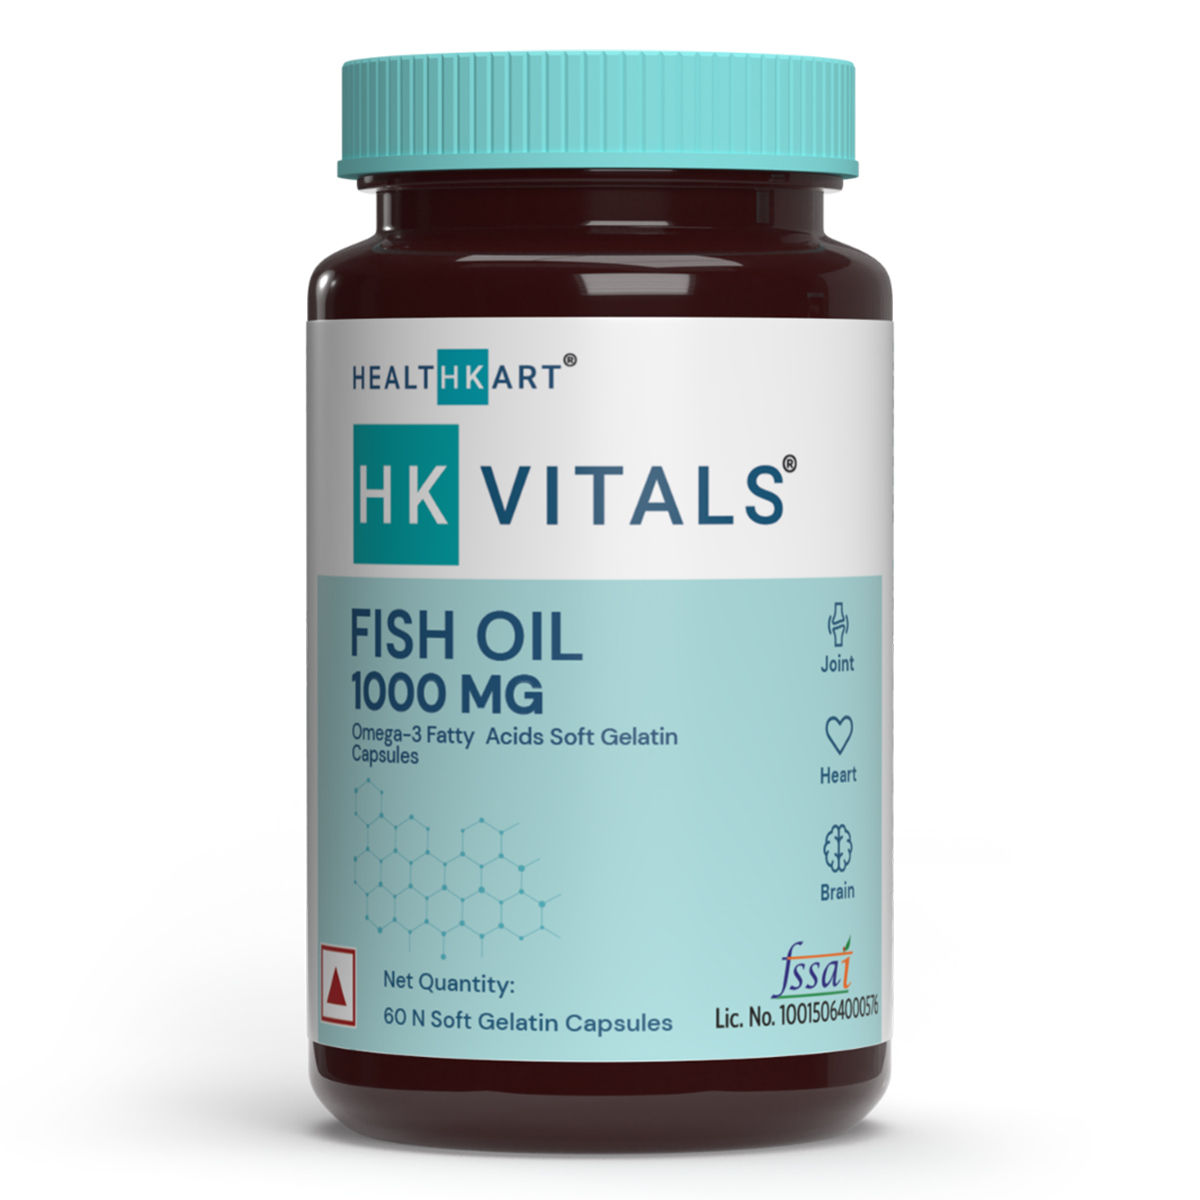 Buy HealthKart HK Vitals Fish Oil 1000 mg, 60 Soft Gelatin Capsules Online